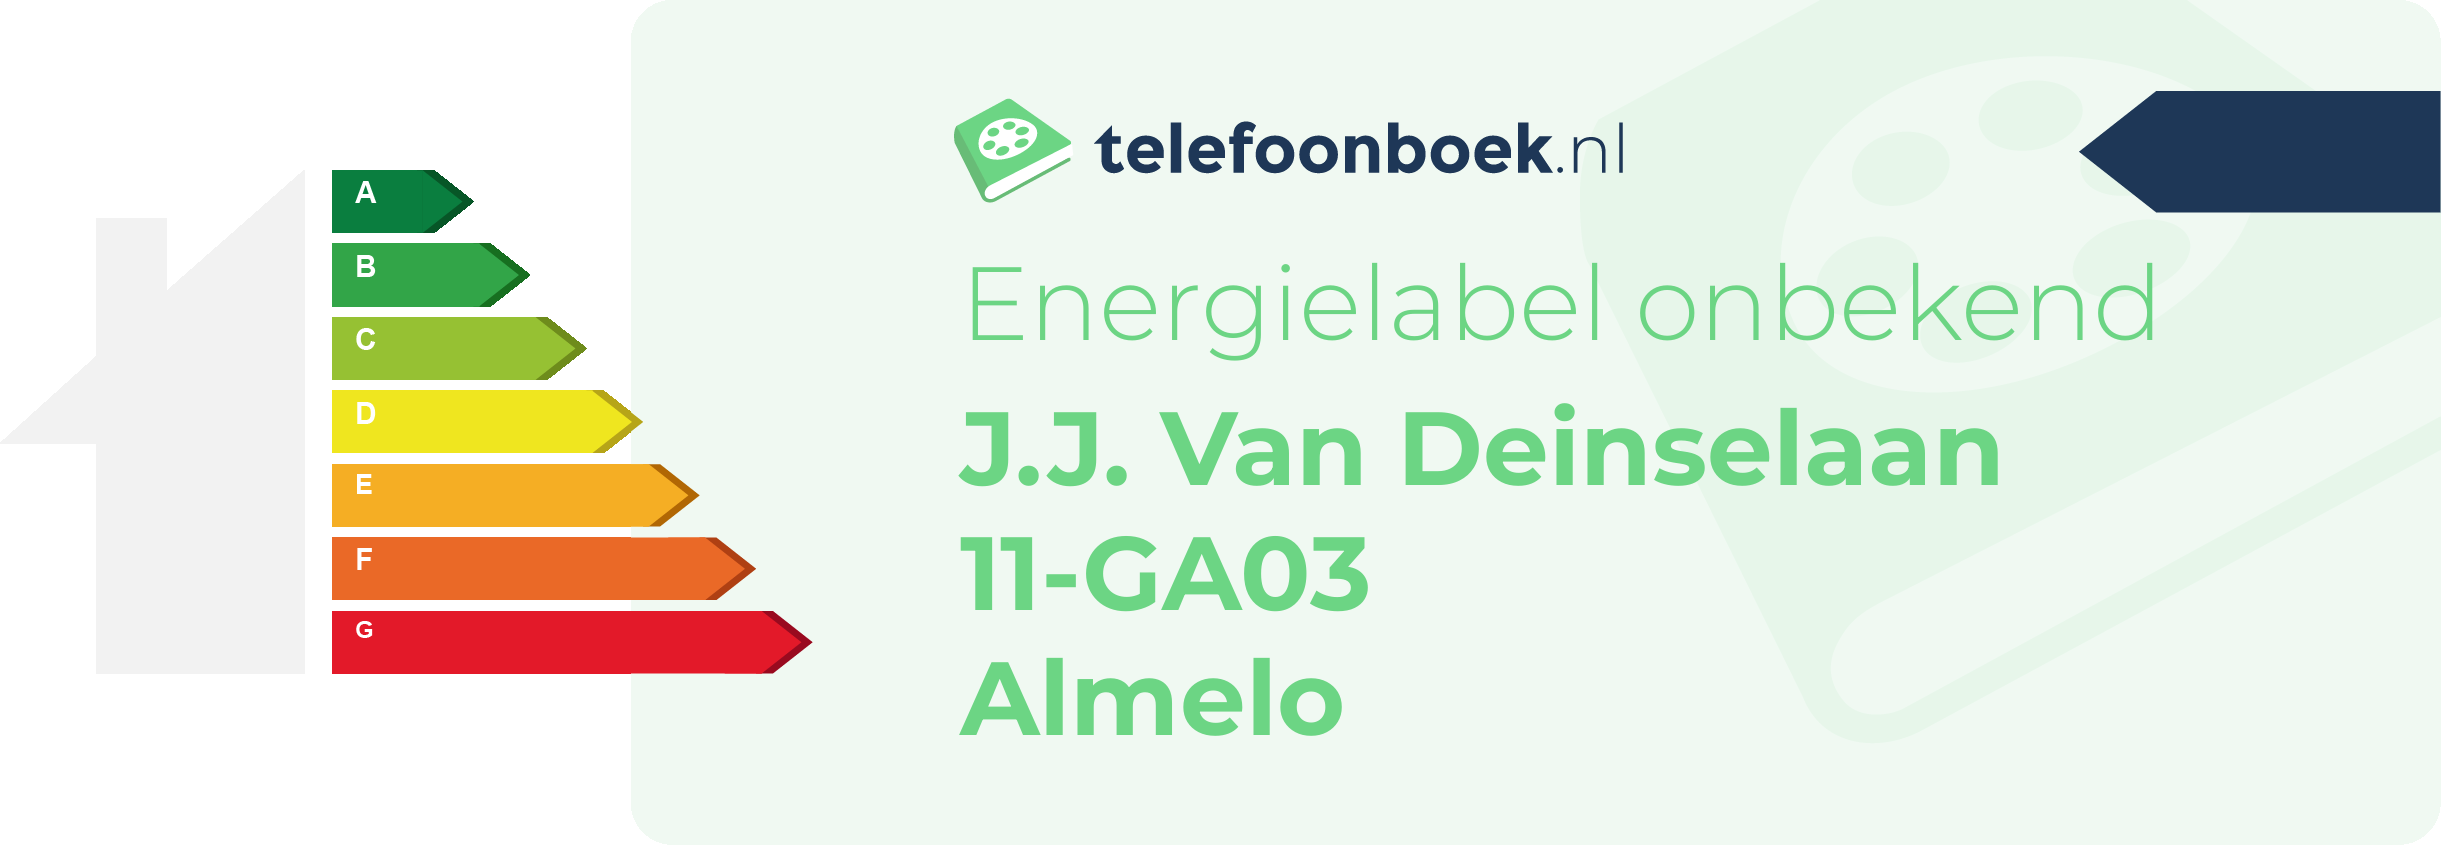 Energielabel J.J. Van Deinselaan 11-GA03 Almelo